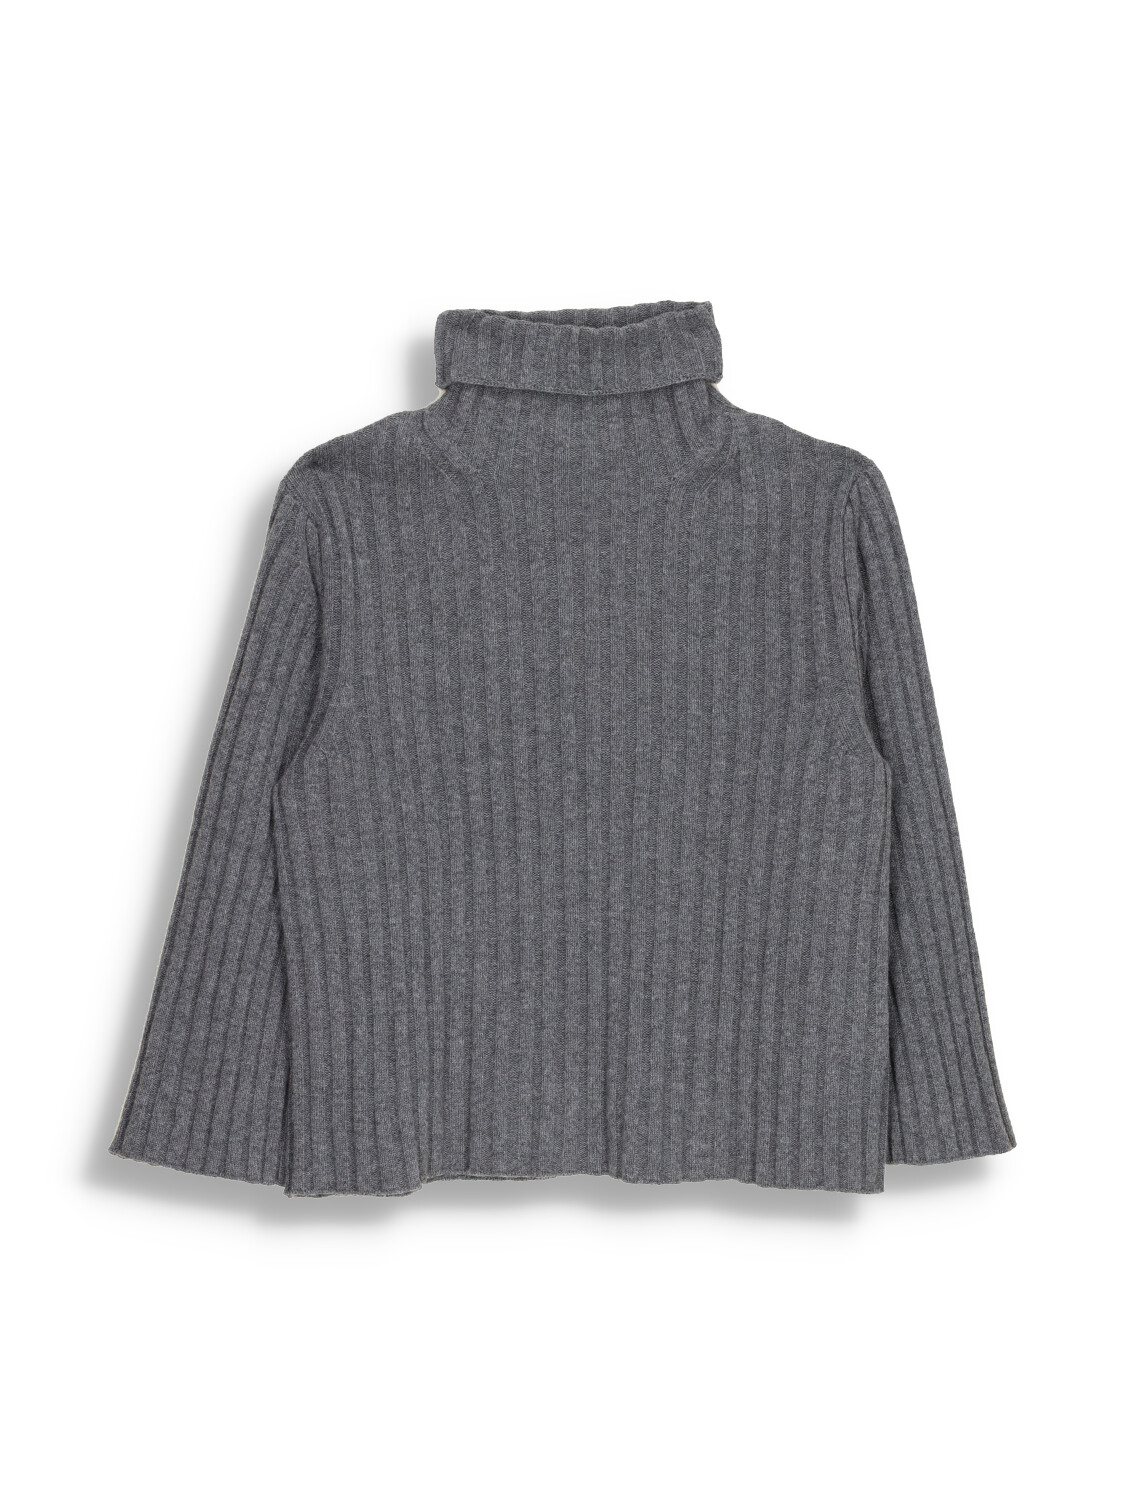 Magnolia - Oversized cashmere turtleneck sweater